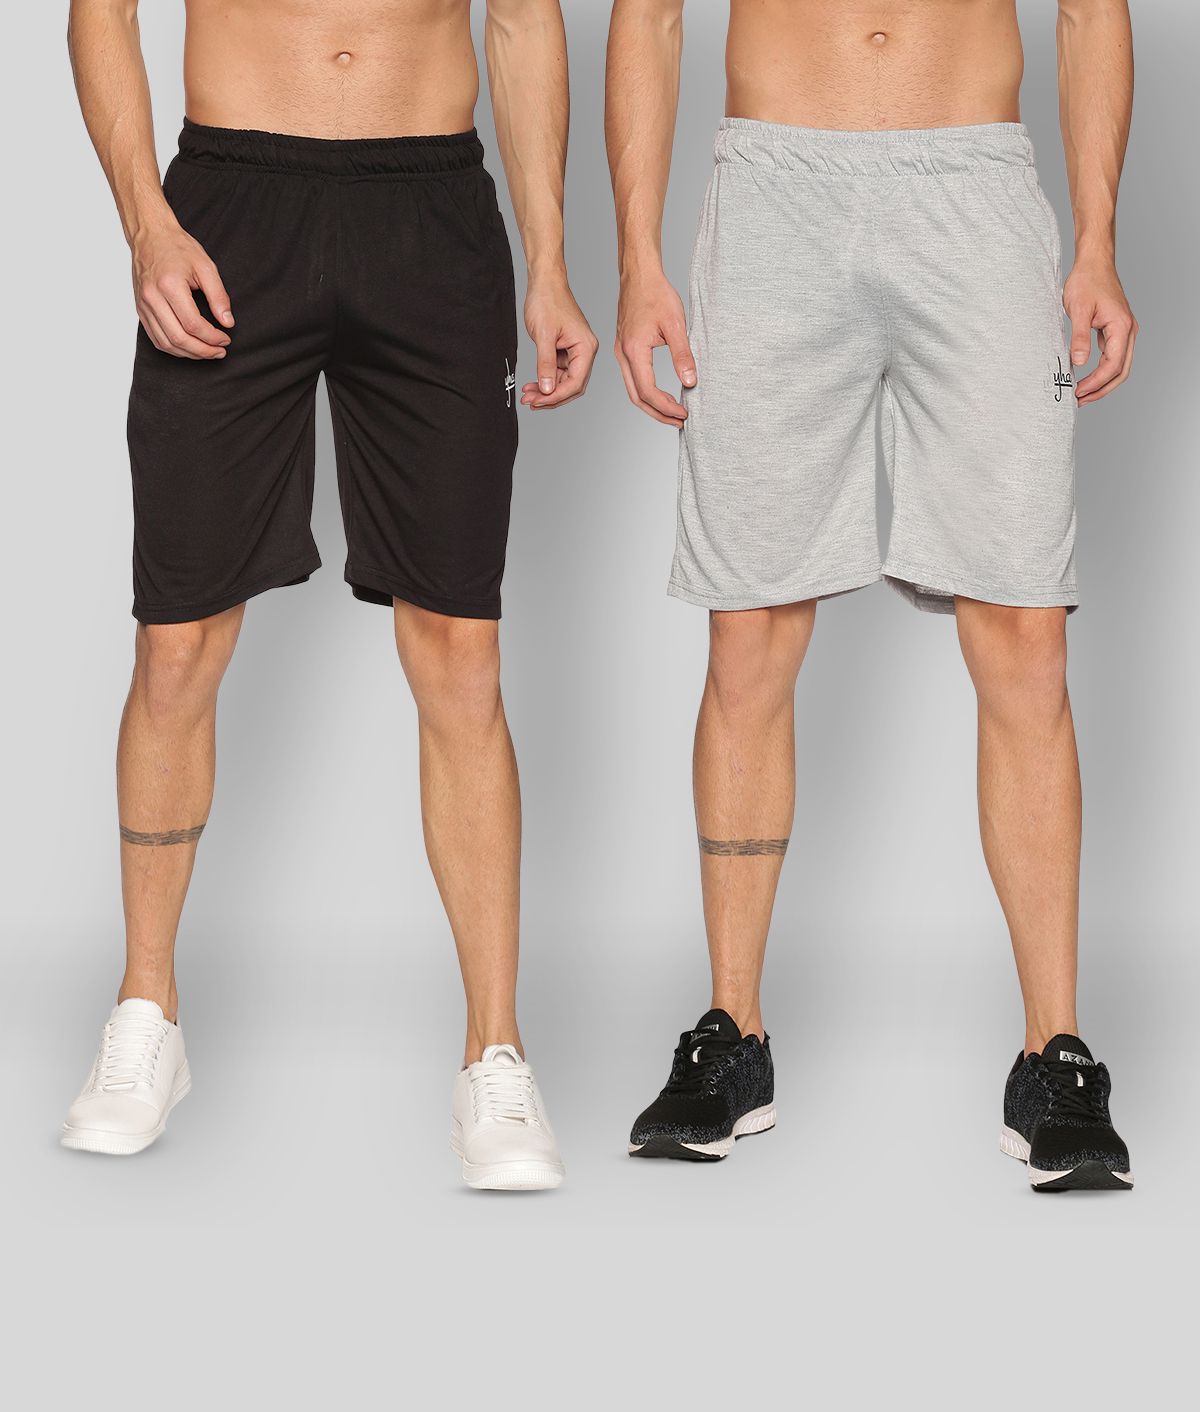     			YHA - Multi Cotton Blend Men's Shorts ( Pack of 2 )